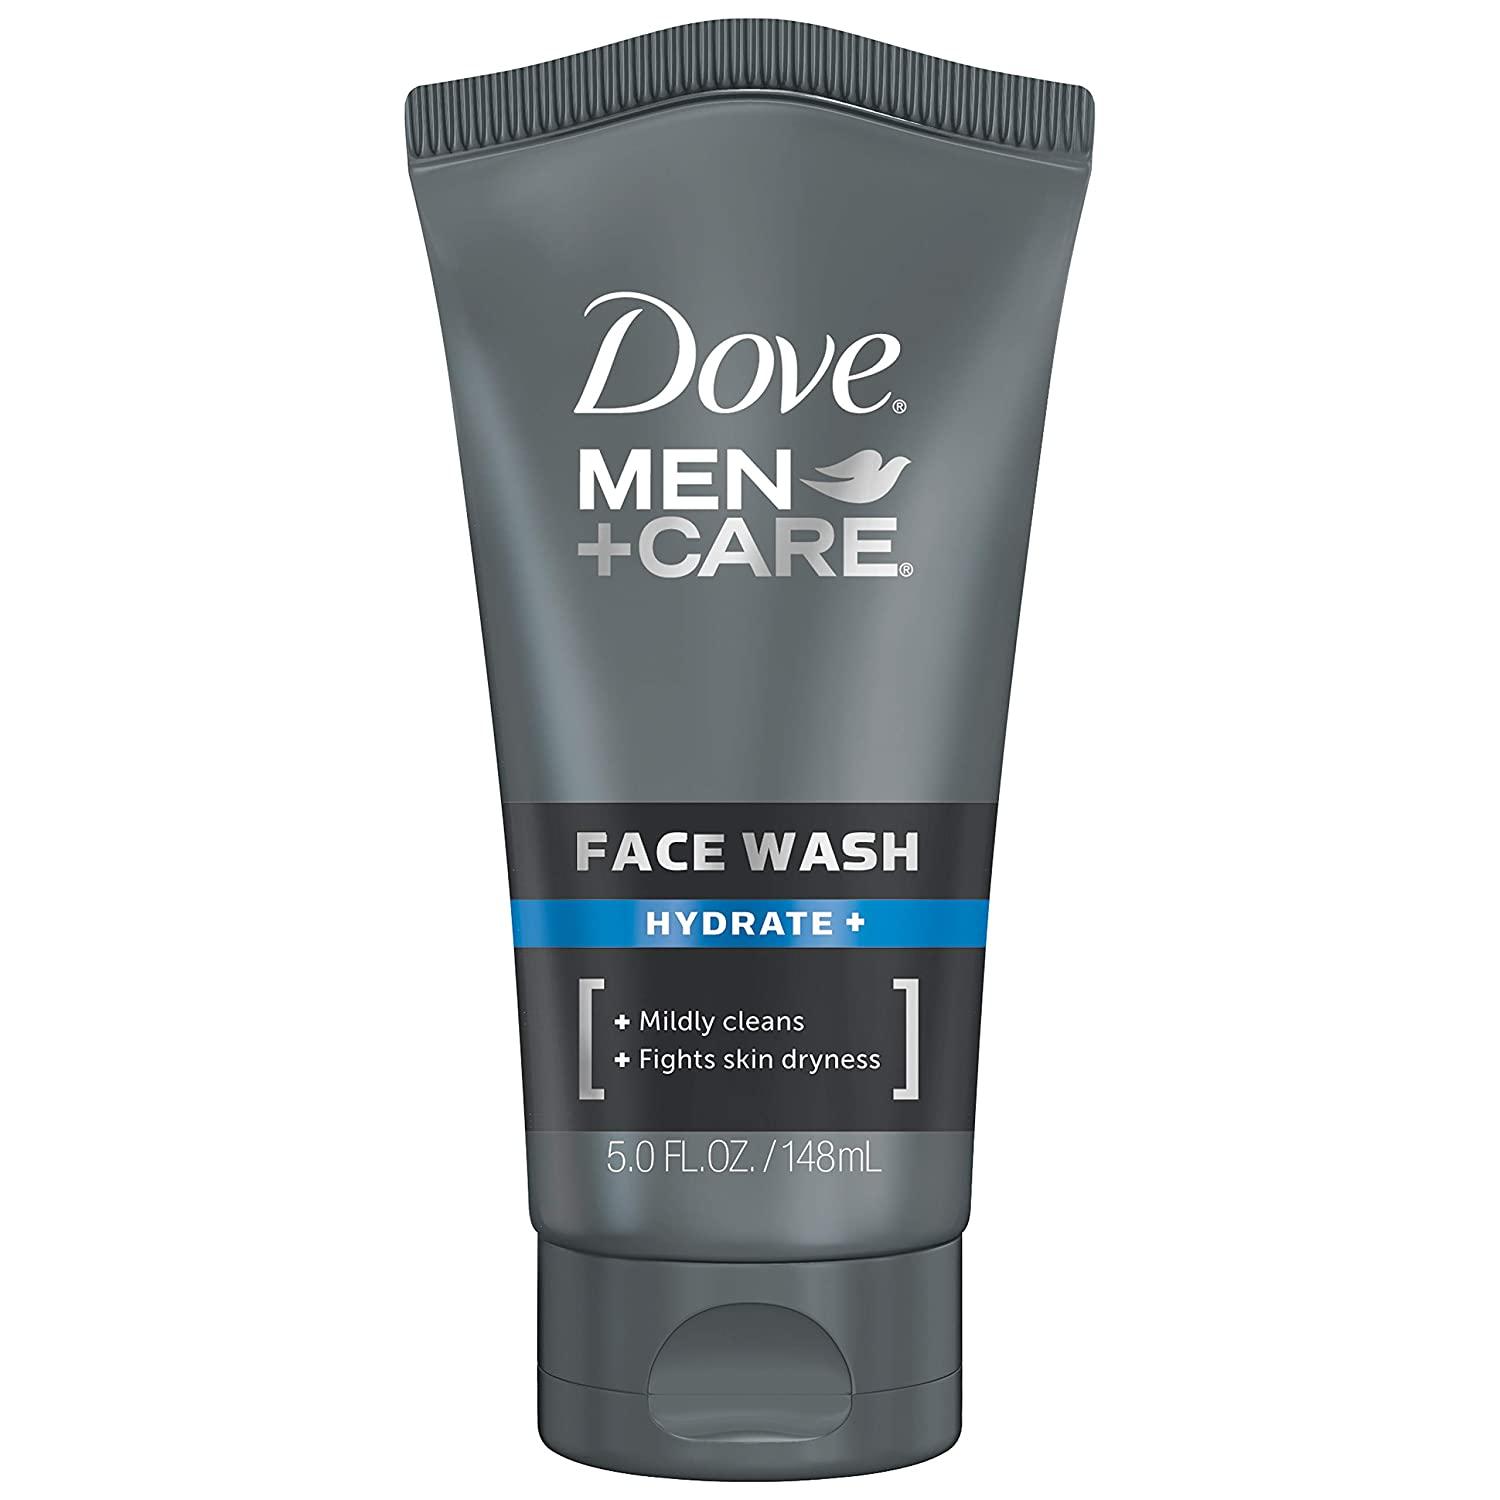 5oz Dove Men+Care Face Wash for $2.07 Shipped